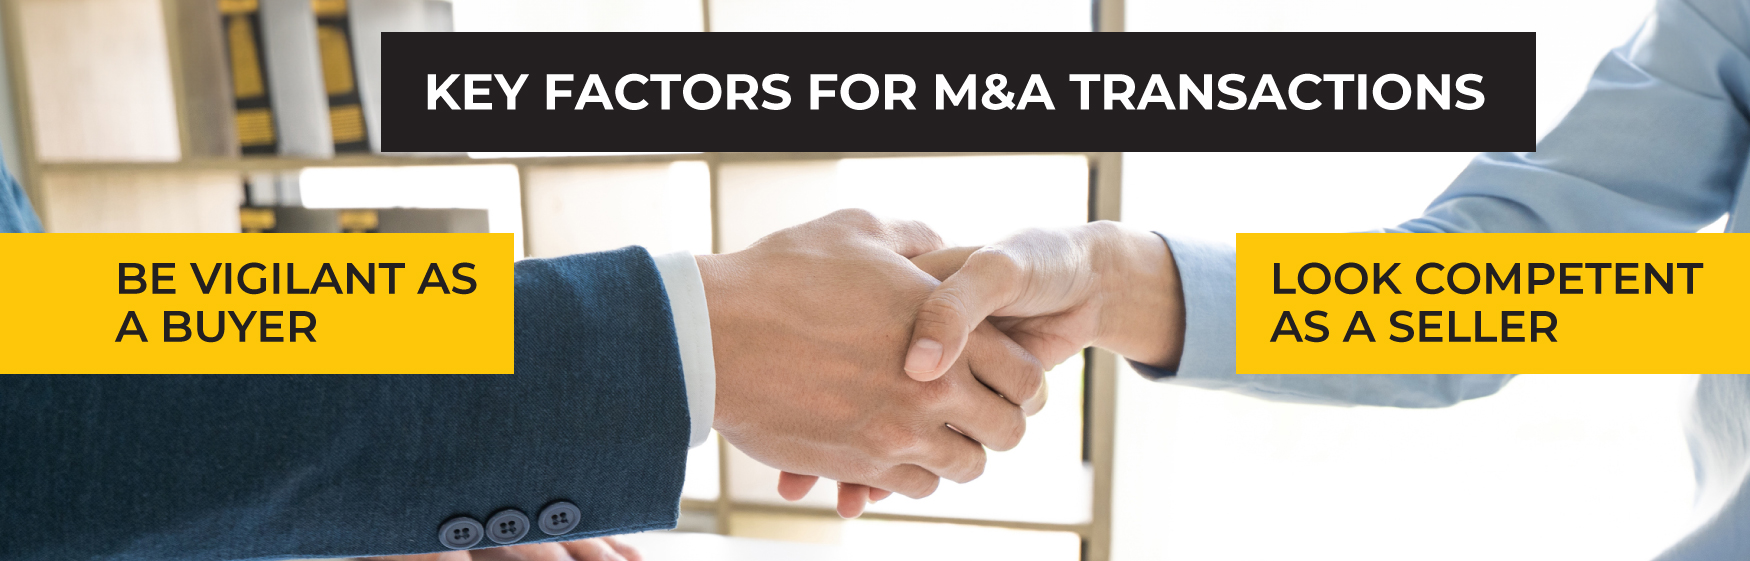 Key factors for M&A transactions